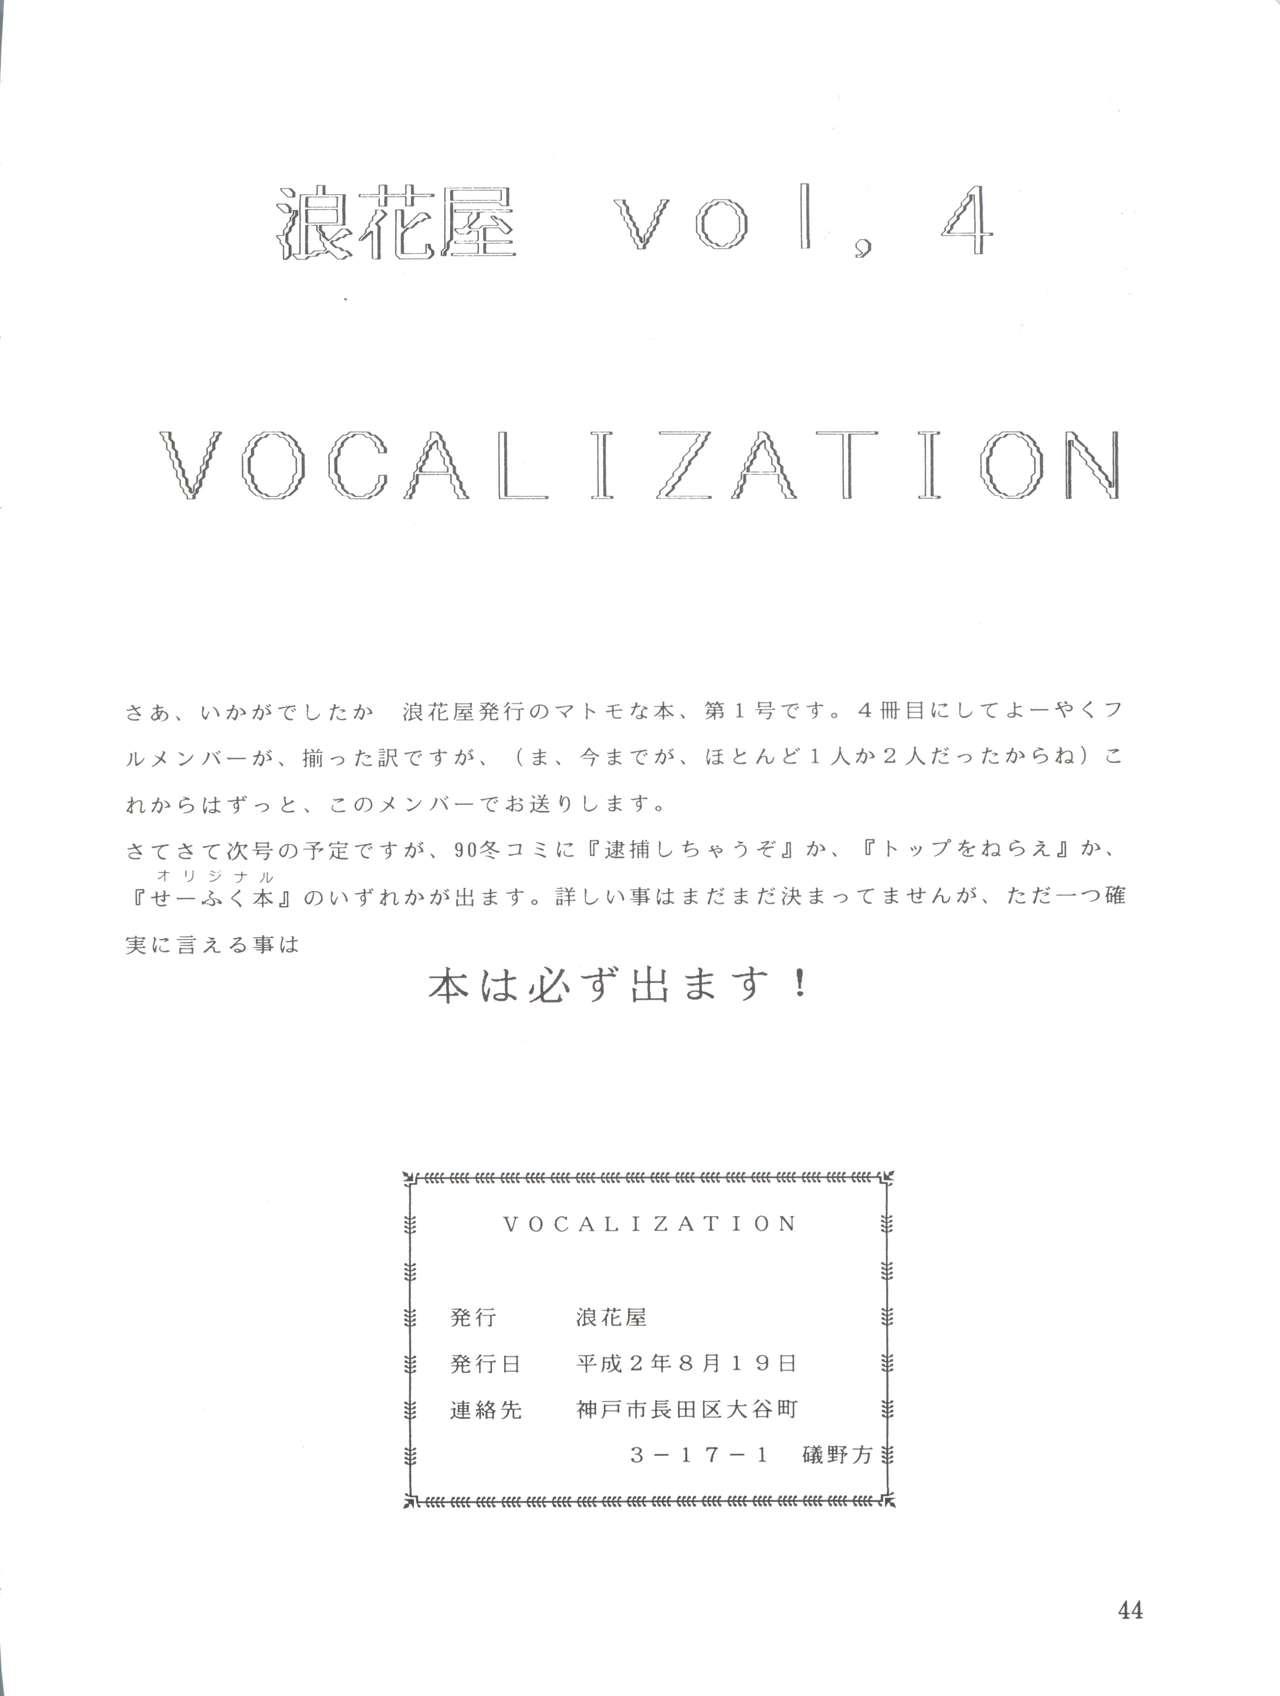 Vocalization 43